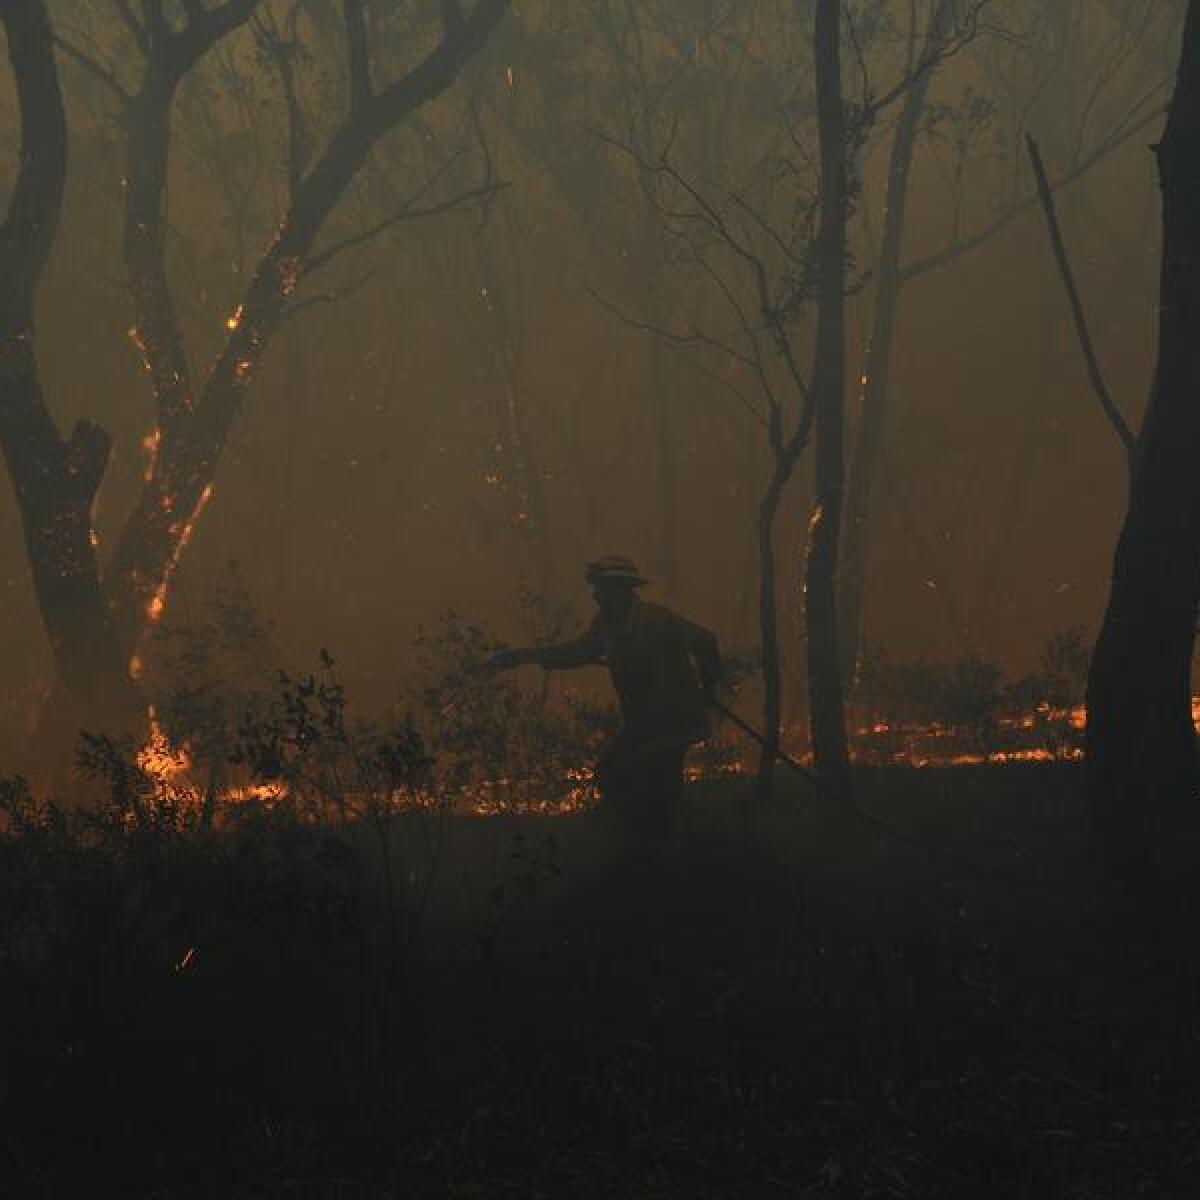 Bushfire (file image)